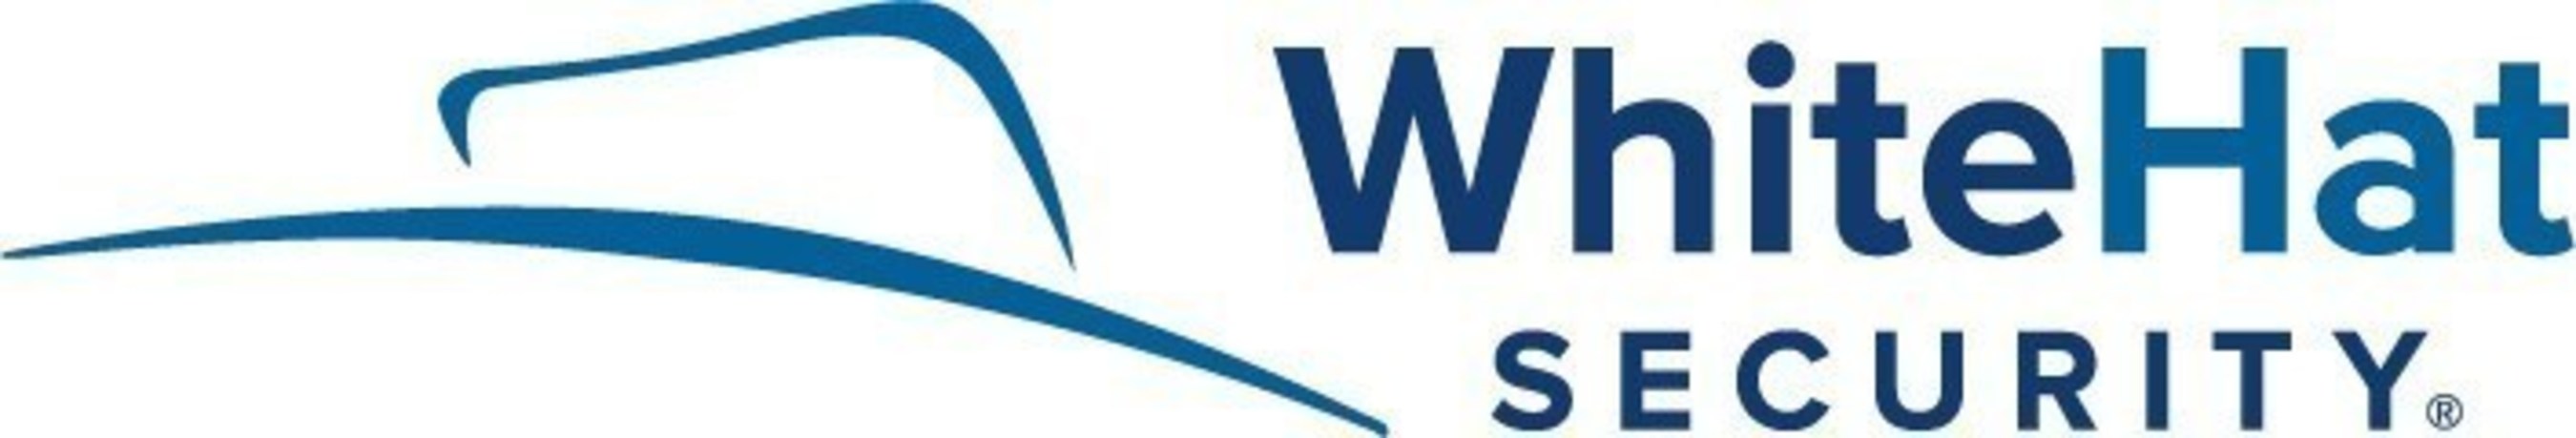 WhiteHat Security logo